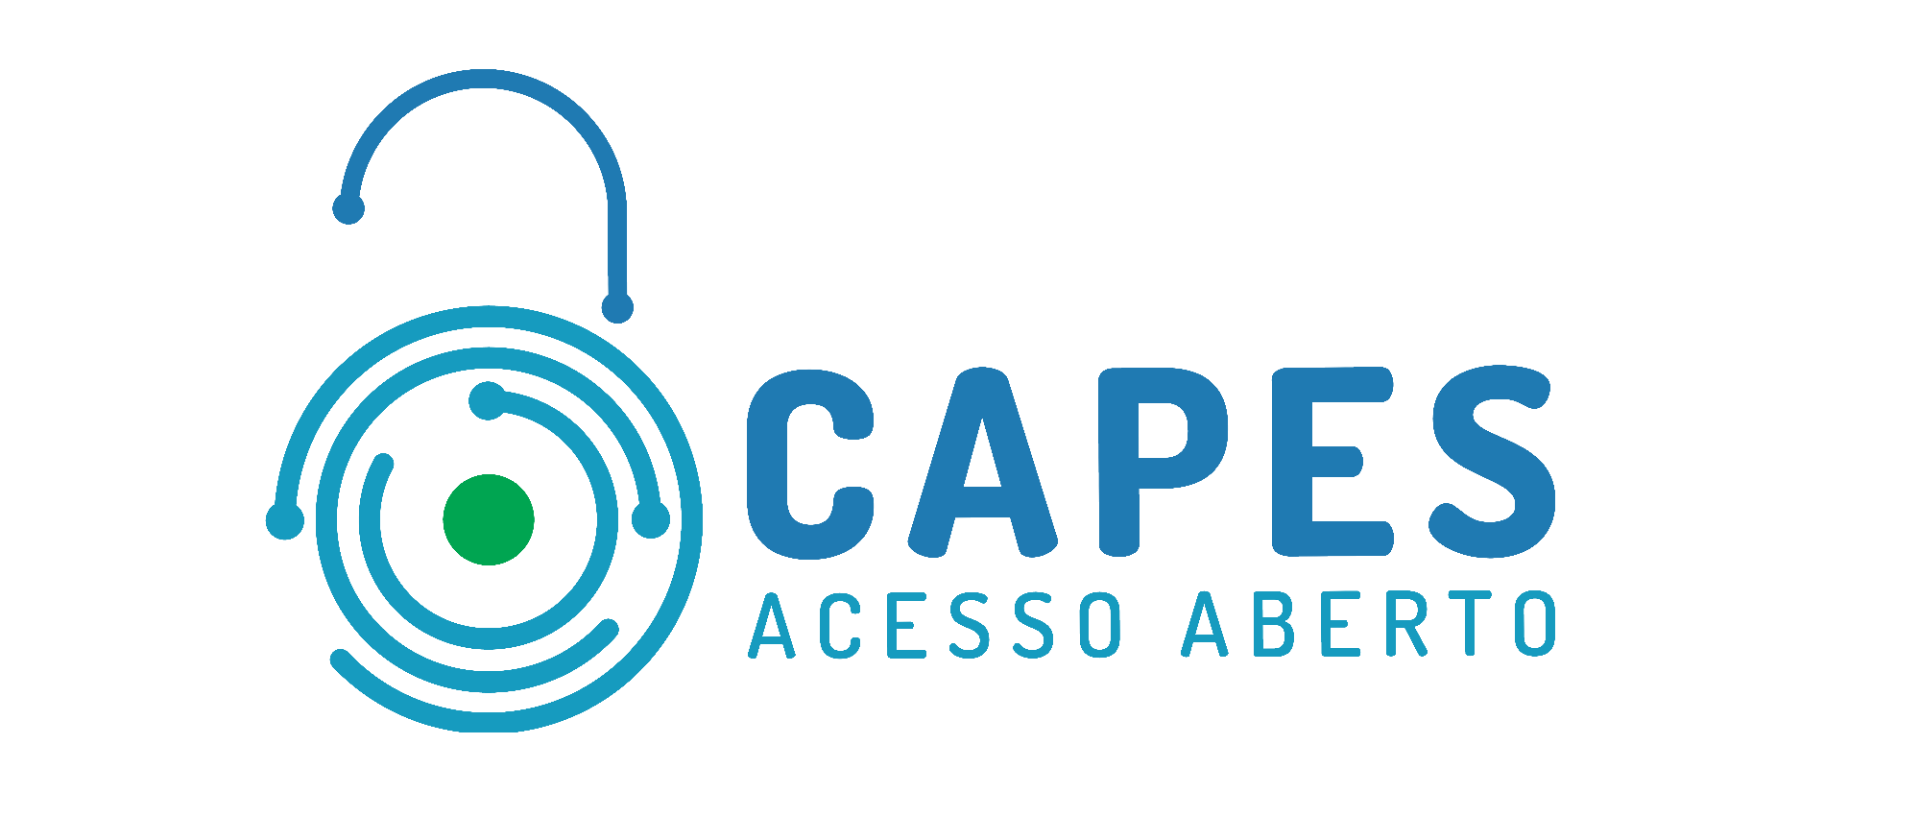 CAPES promove debate sobre equidade no Acesso Aberto